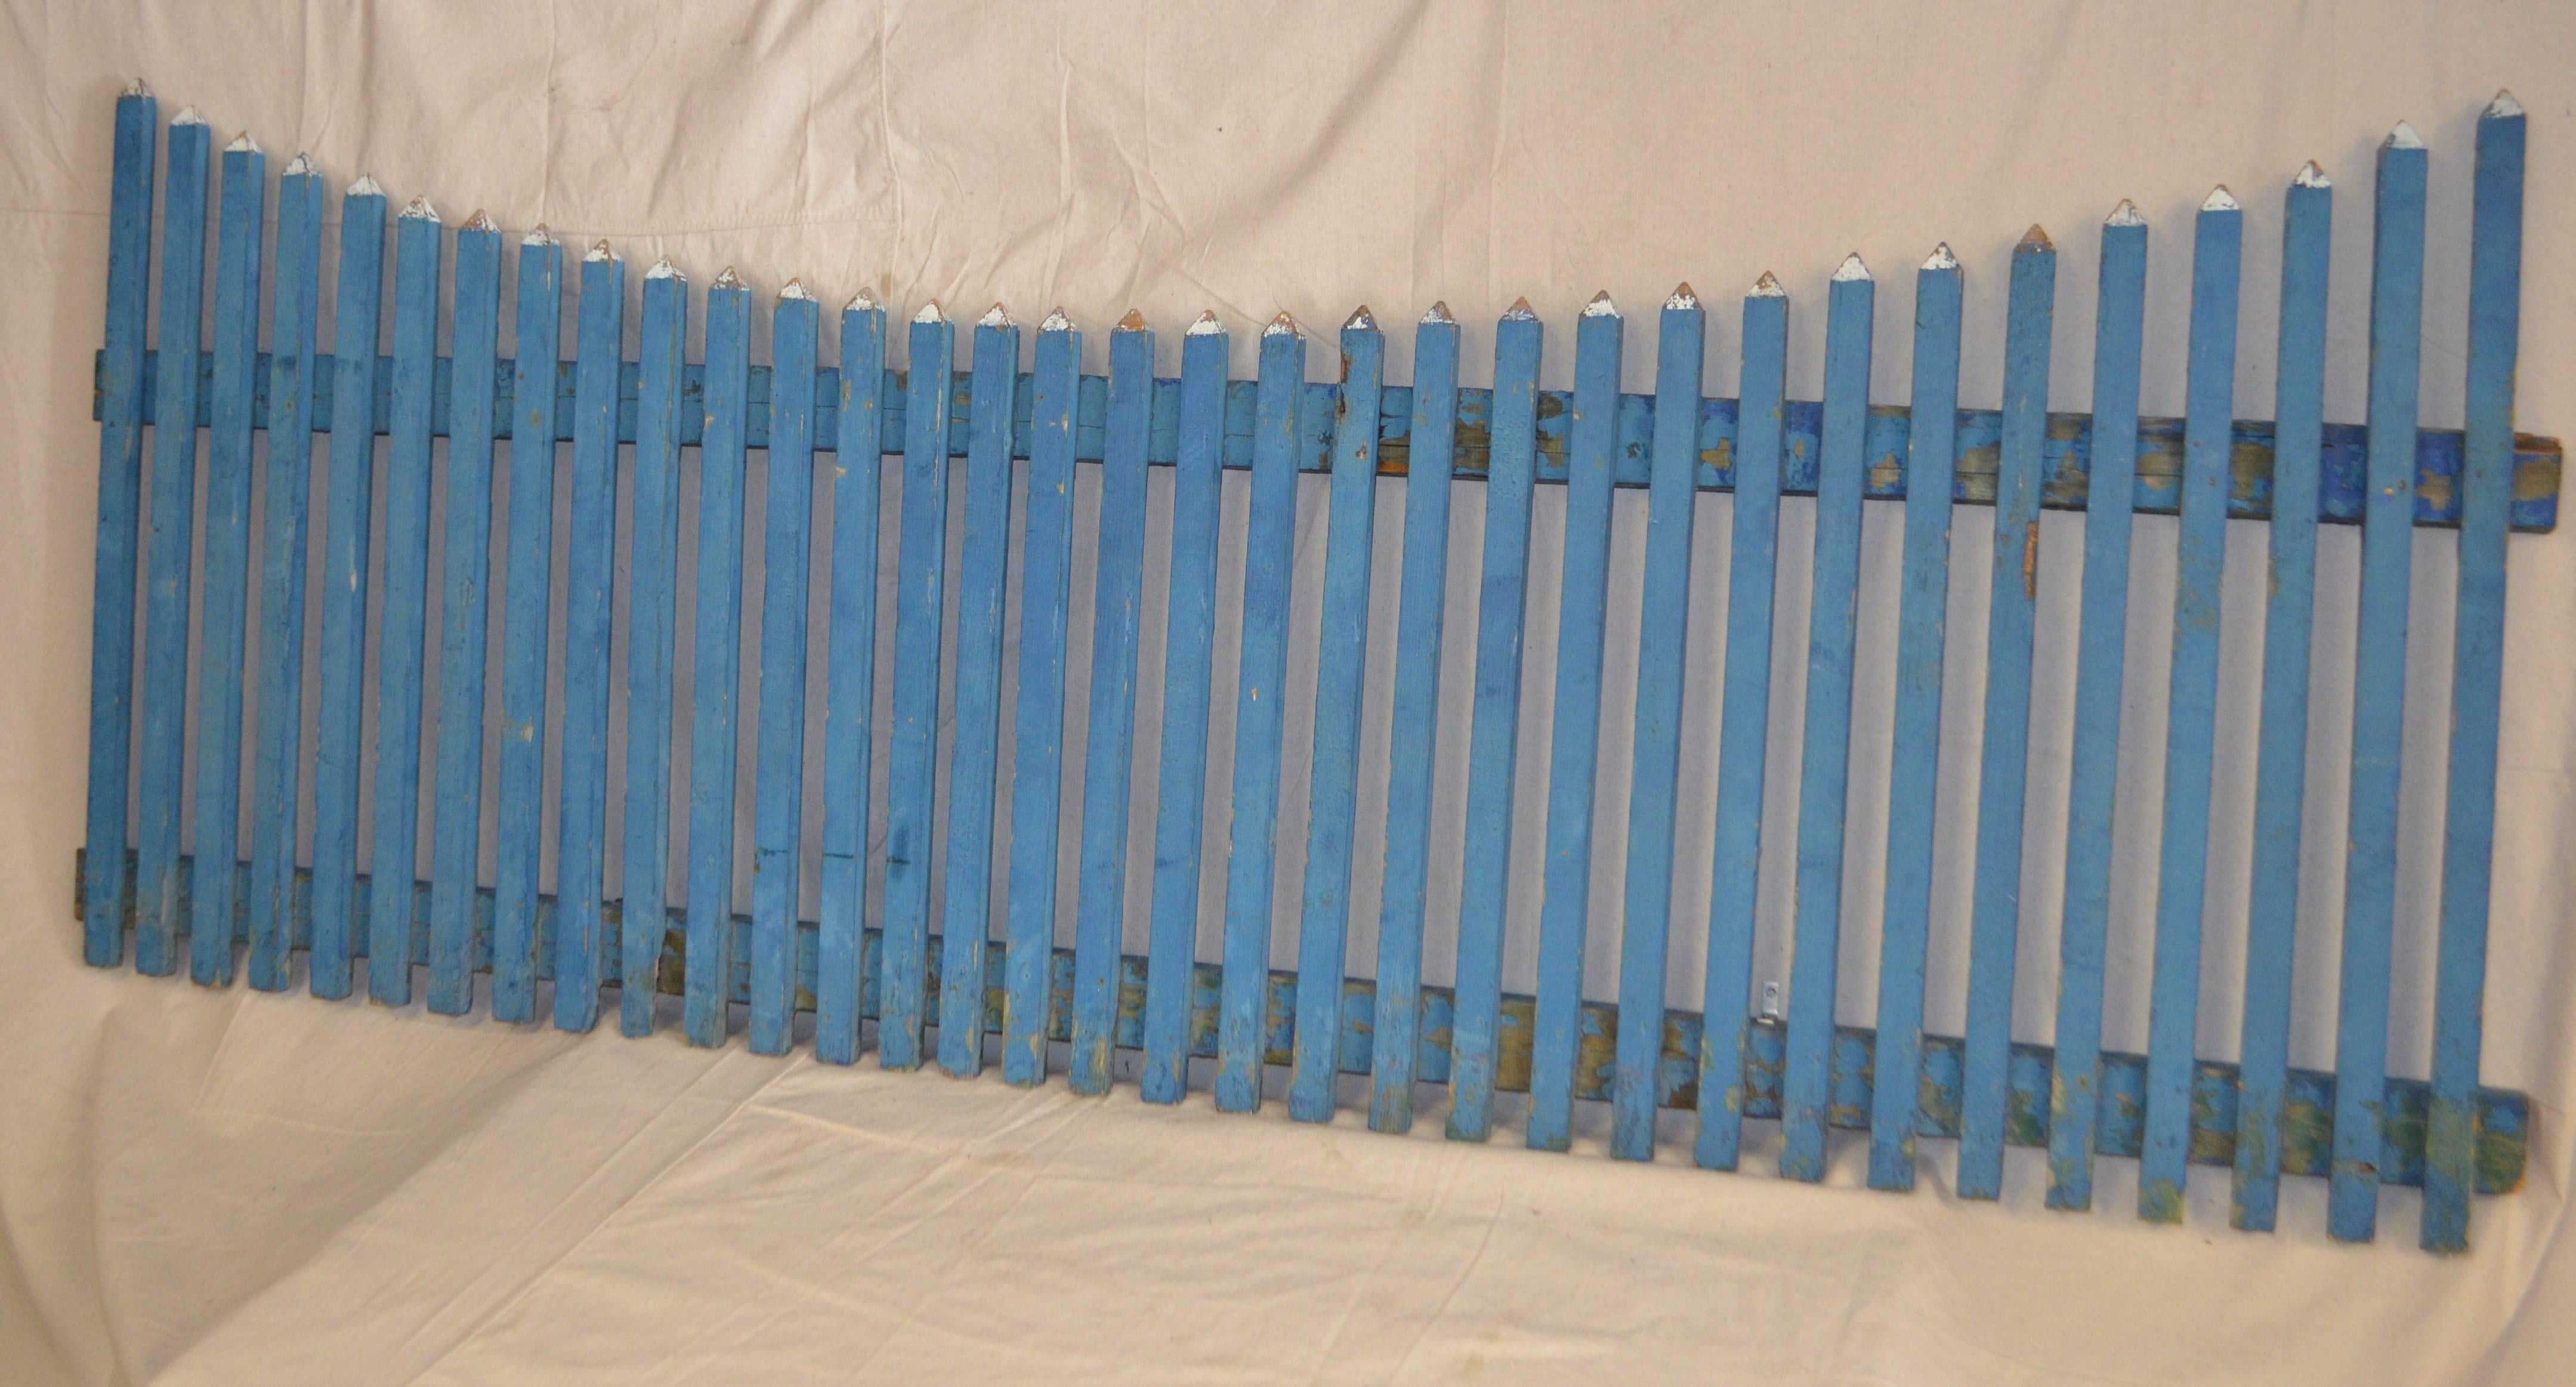 North American Garden Picket Fence in Original Blue Paint.